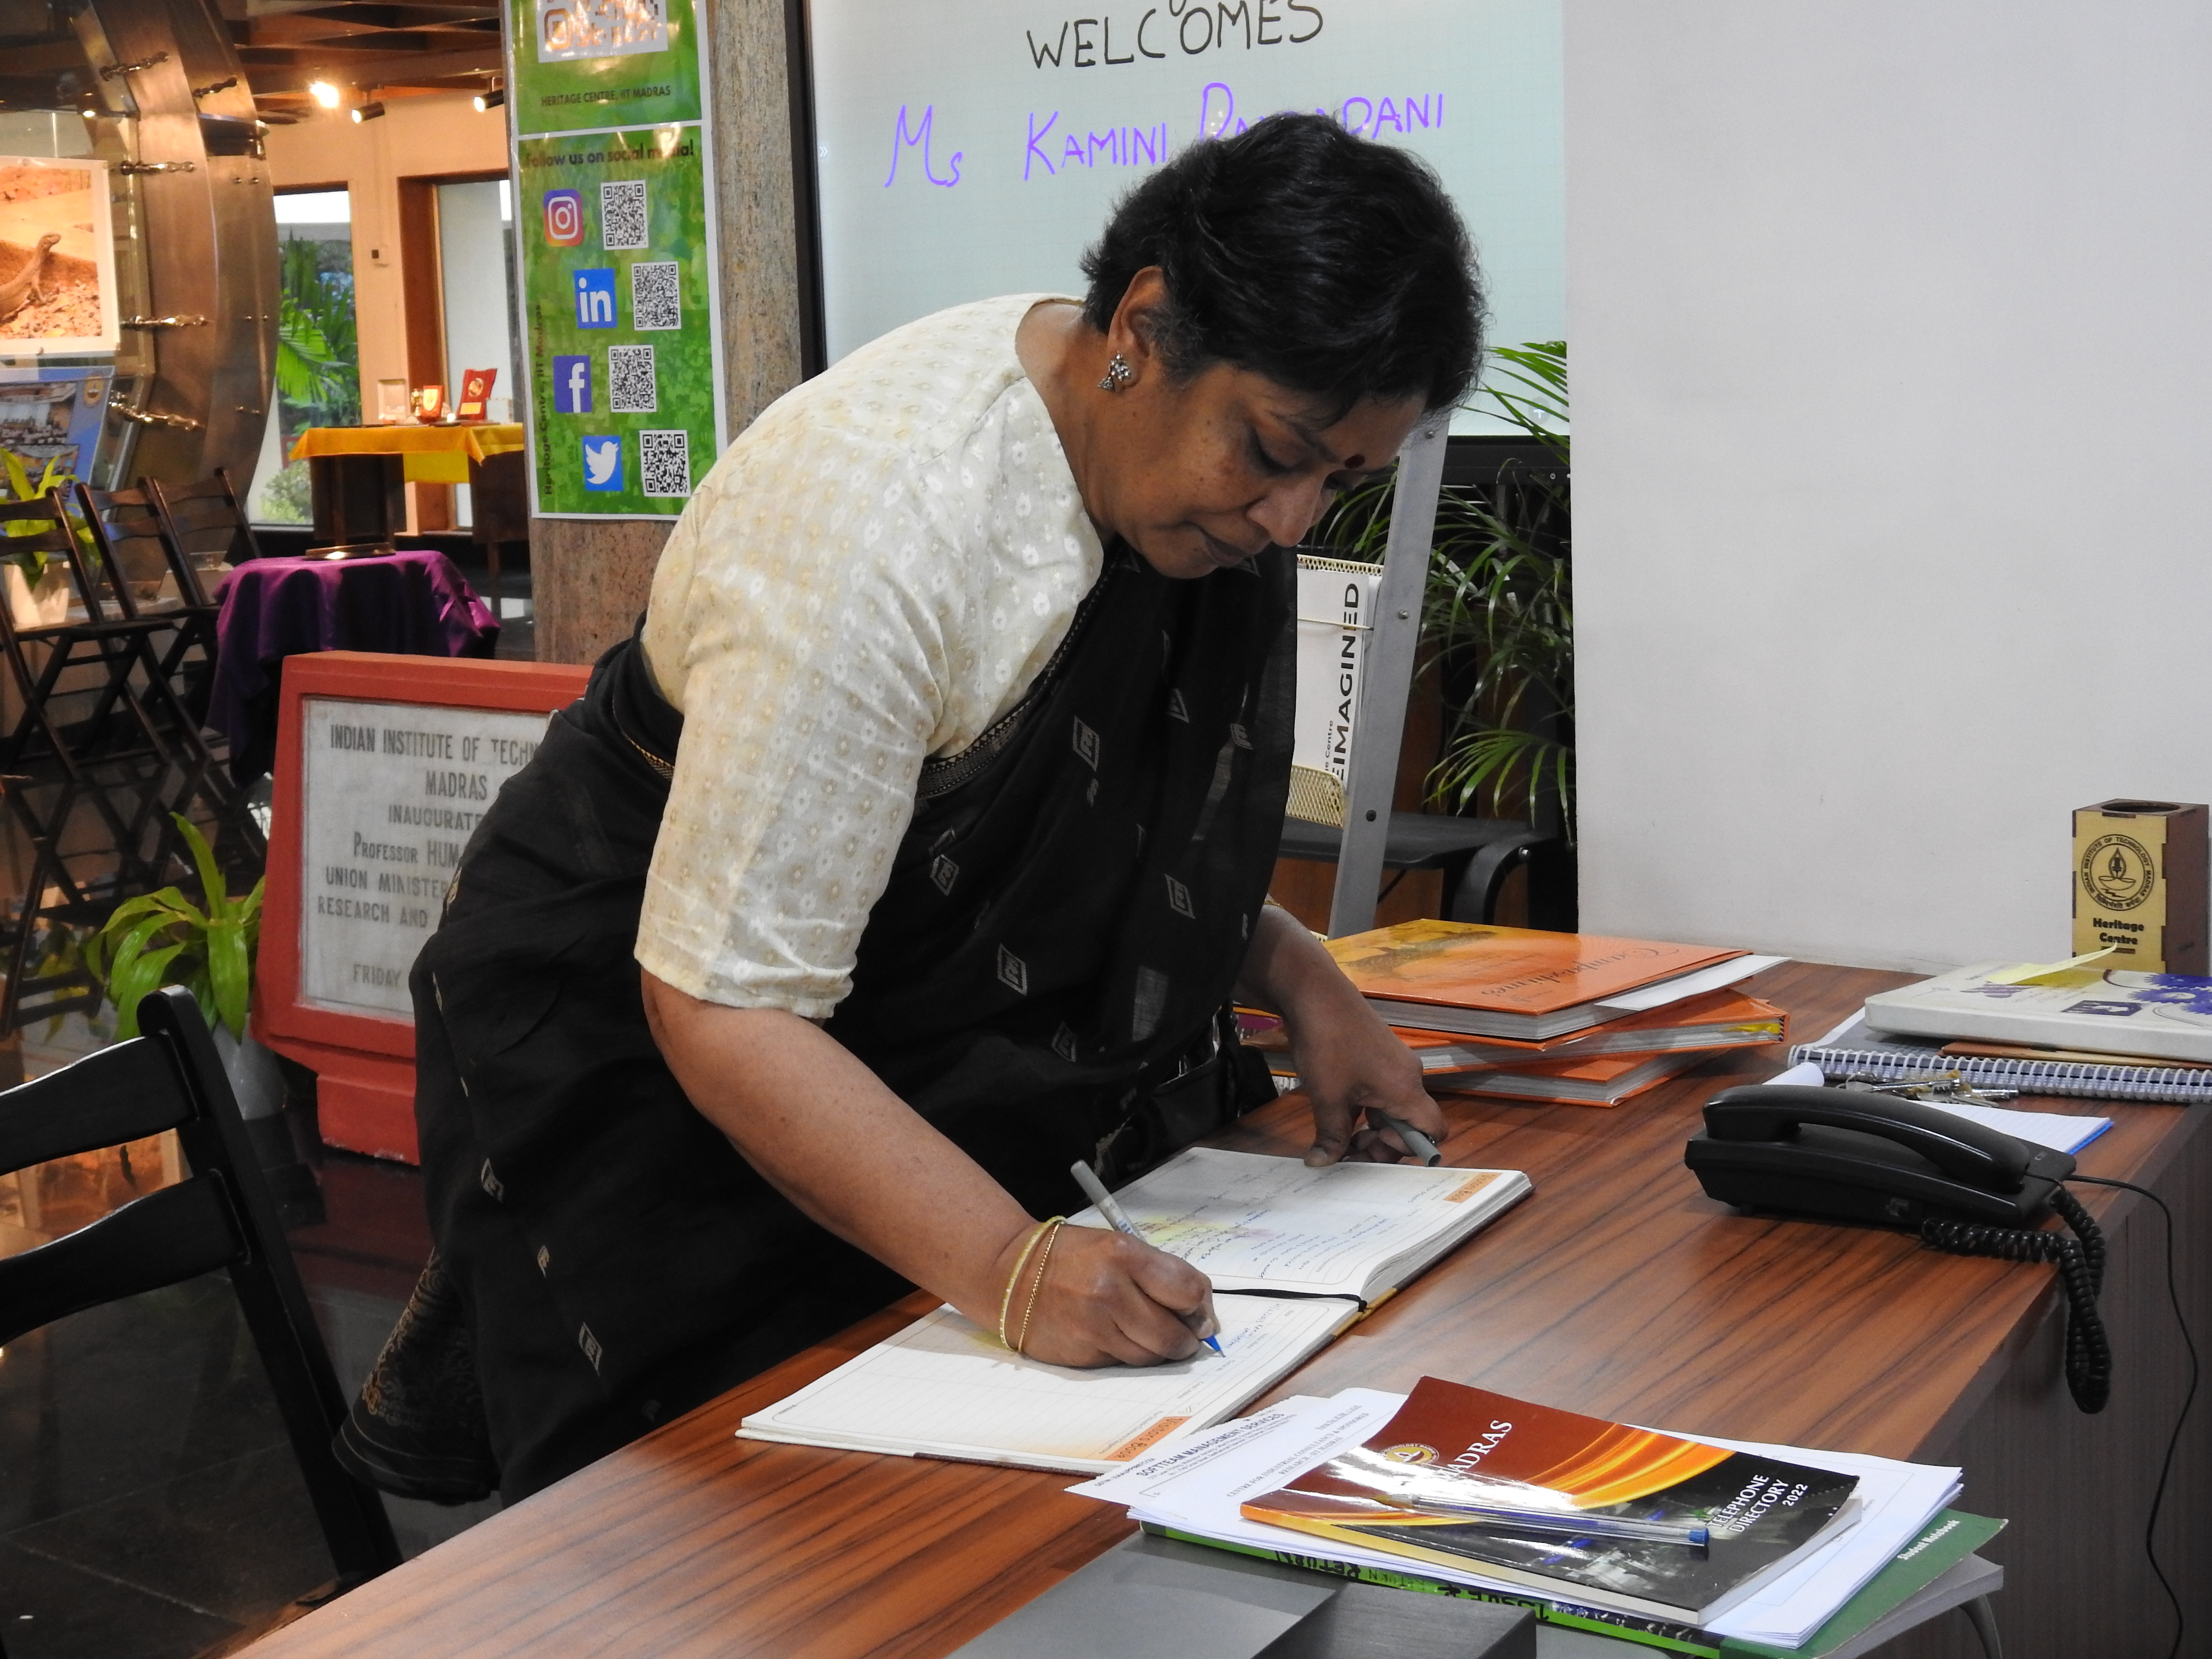 Kamini Dandapani signs the Visitors' Book at the Heritage Centre